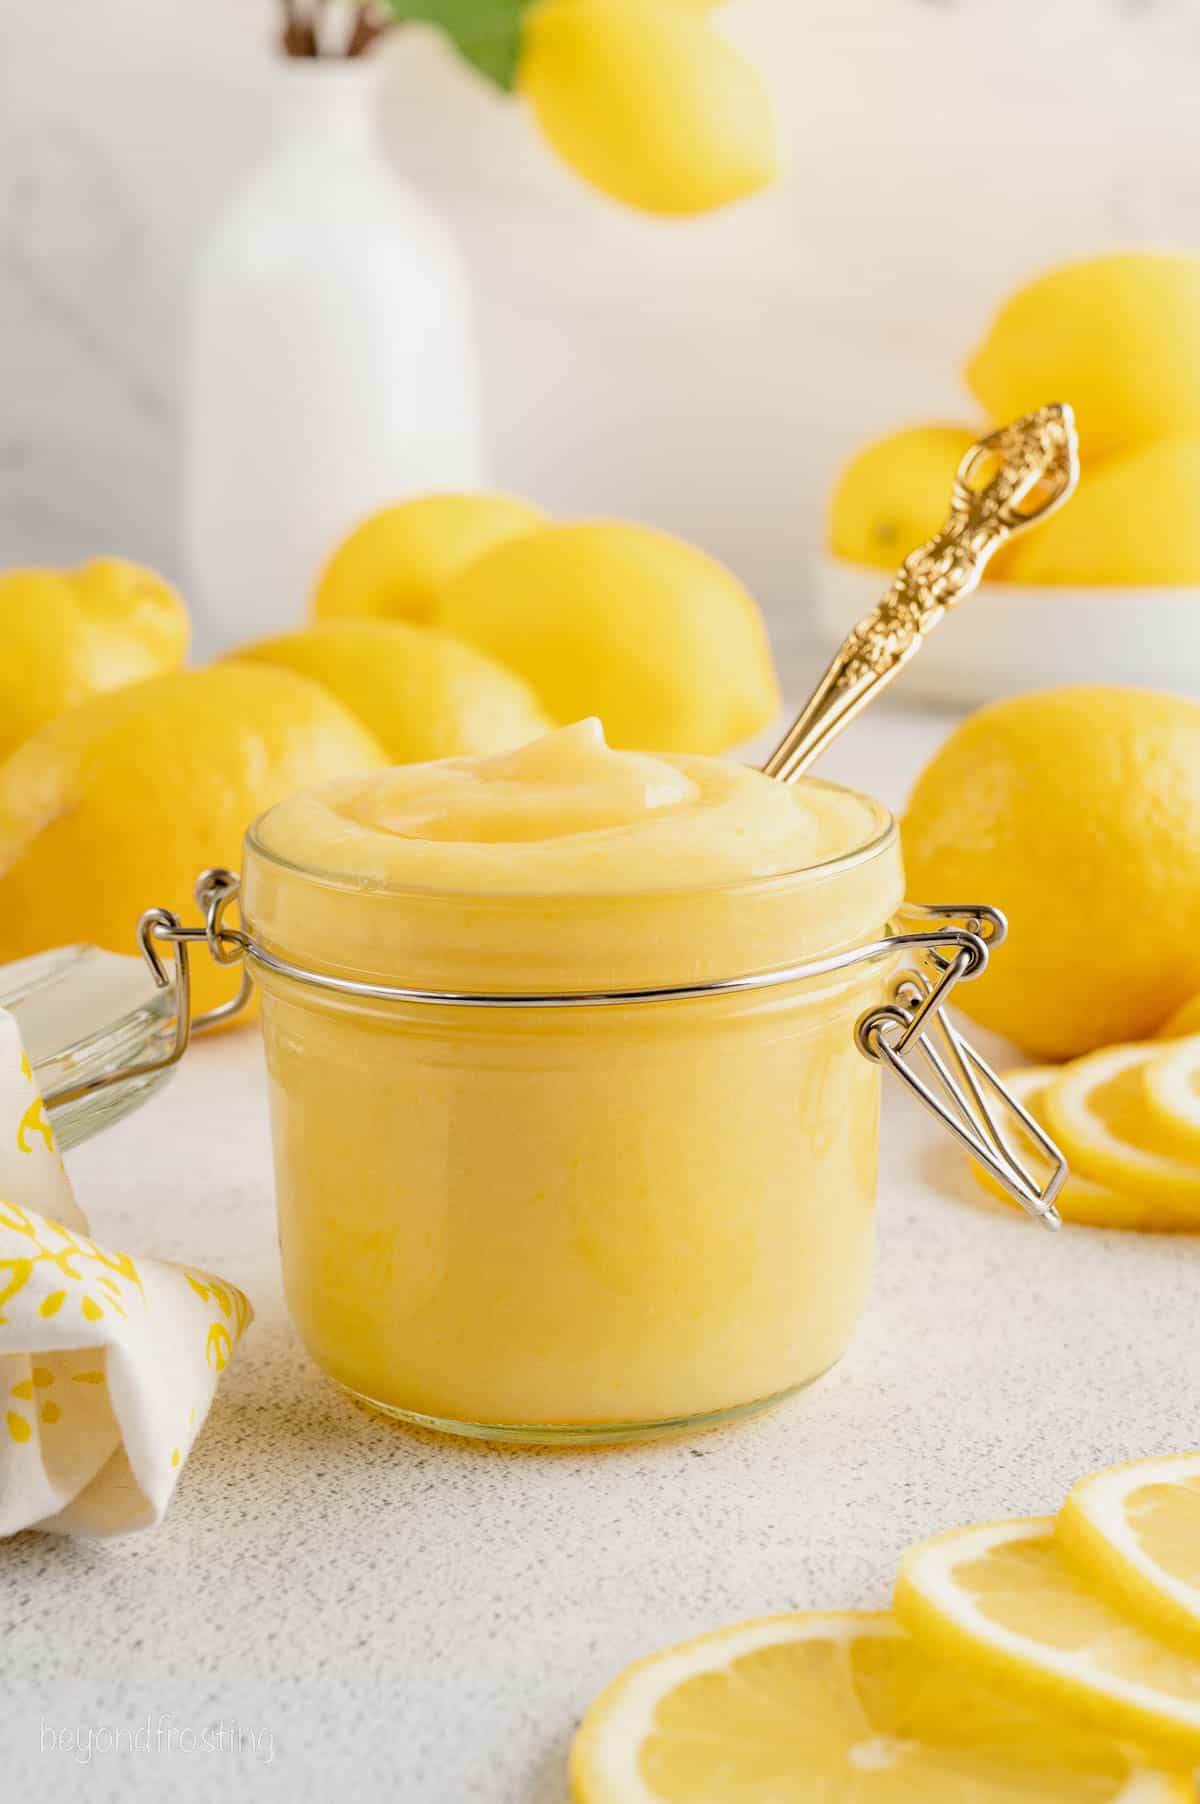 Homemade lemon curd in a glass jar surrounded by fresh lemons.